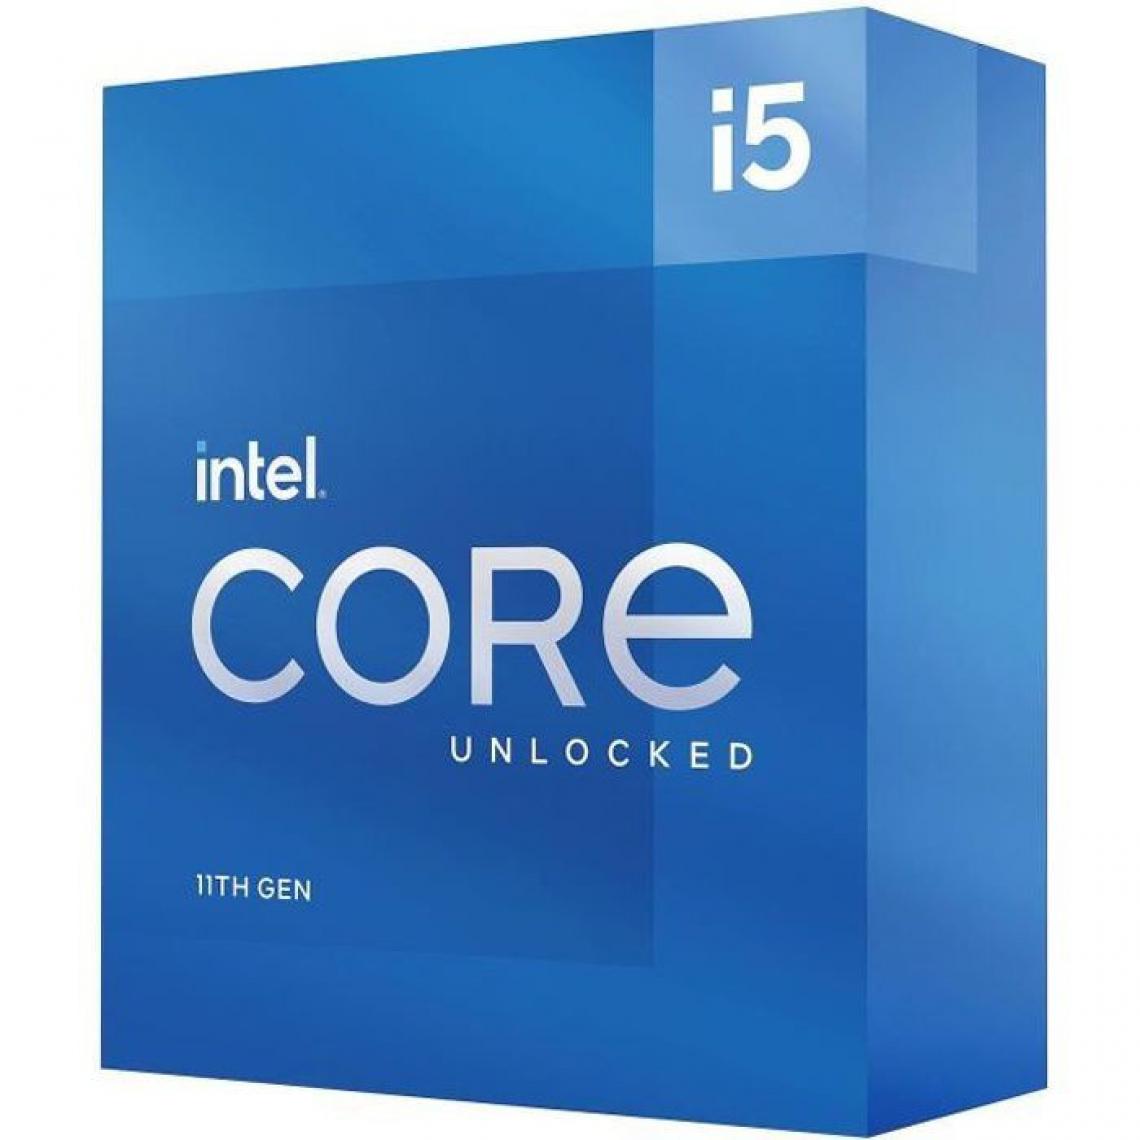 Intel - INTEL - Processeur Intel Core i5-11500 - 6 coeurs / 4,6 GHz - Socket 1200 - 65W - Processeur INTEL